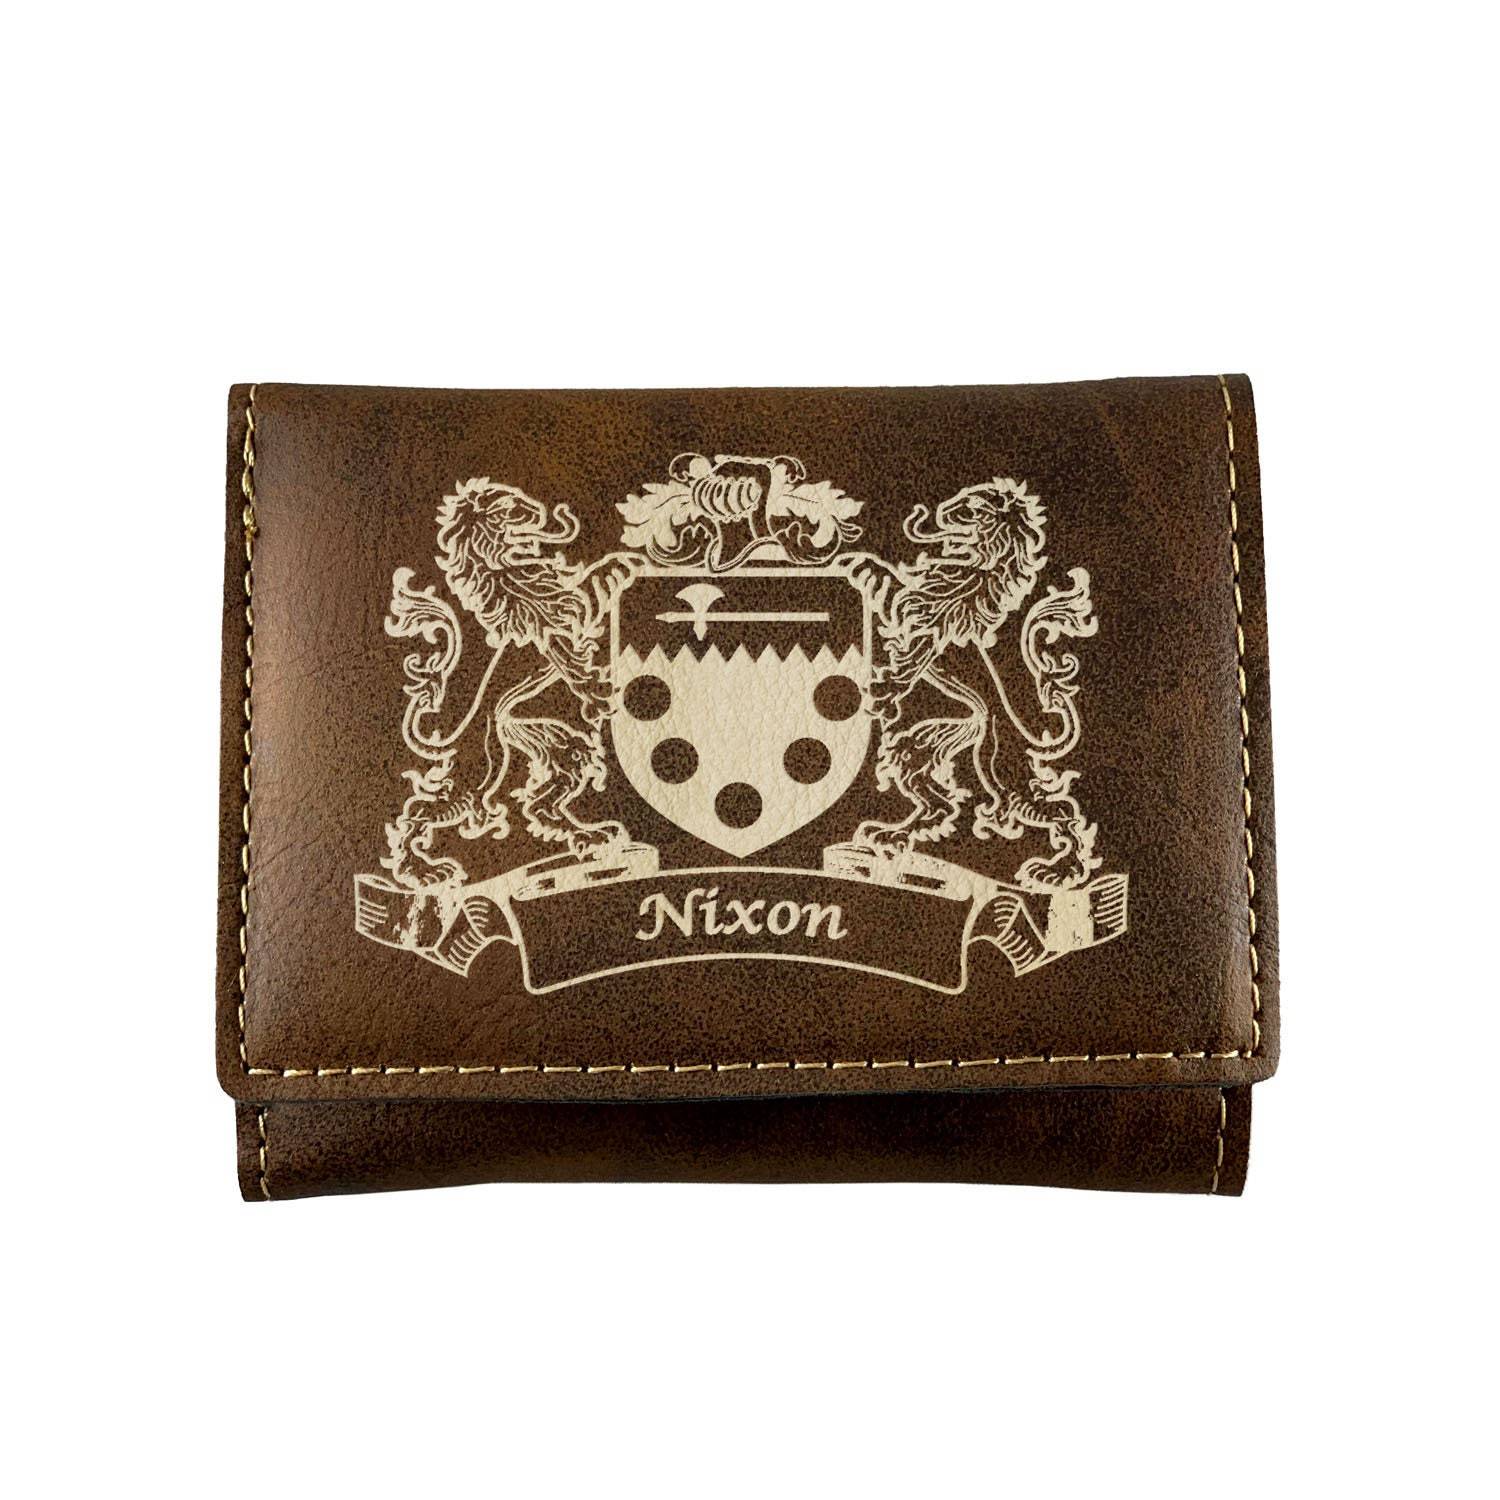 Irish Rose Gifts - Nixon irish coat of arms rustic leather wallet